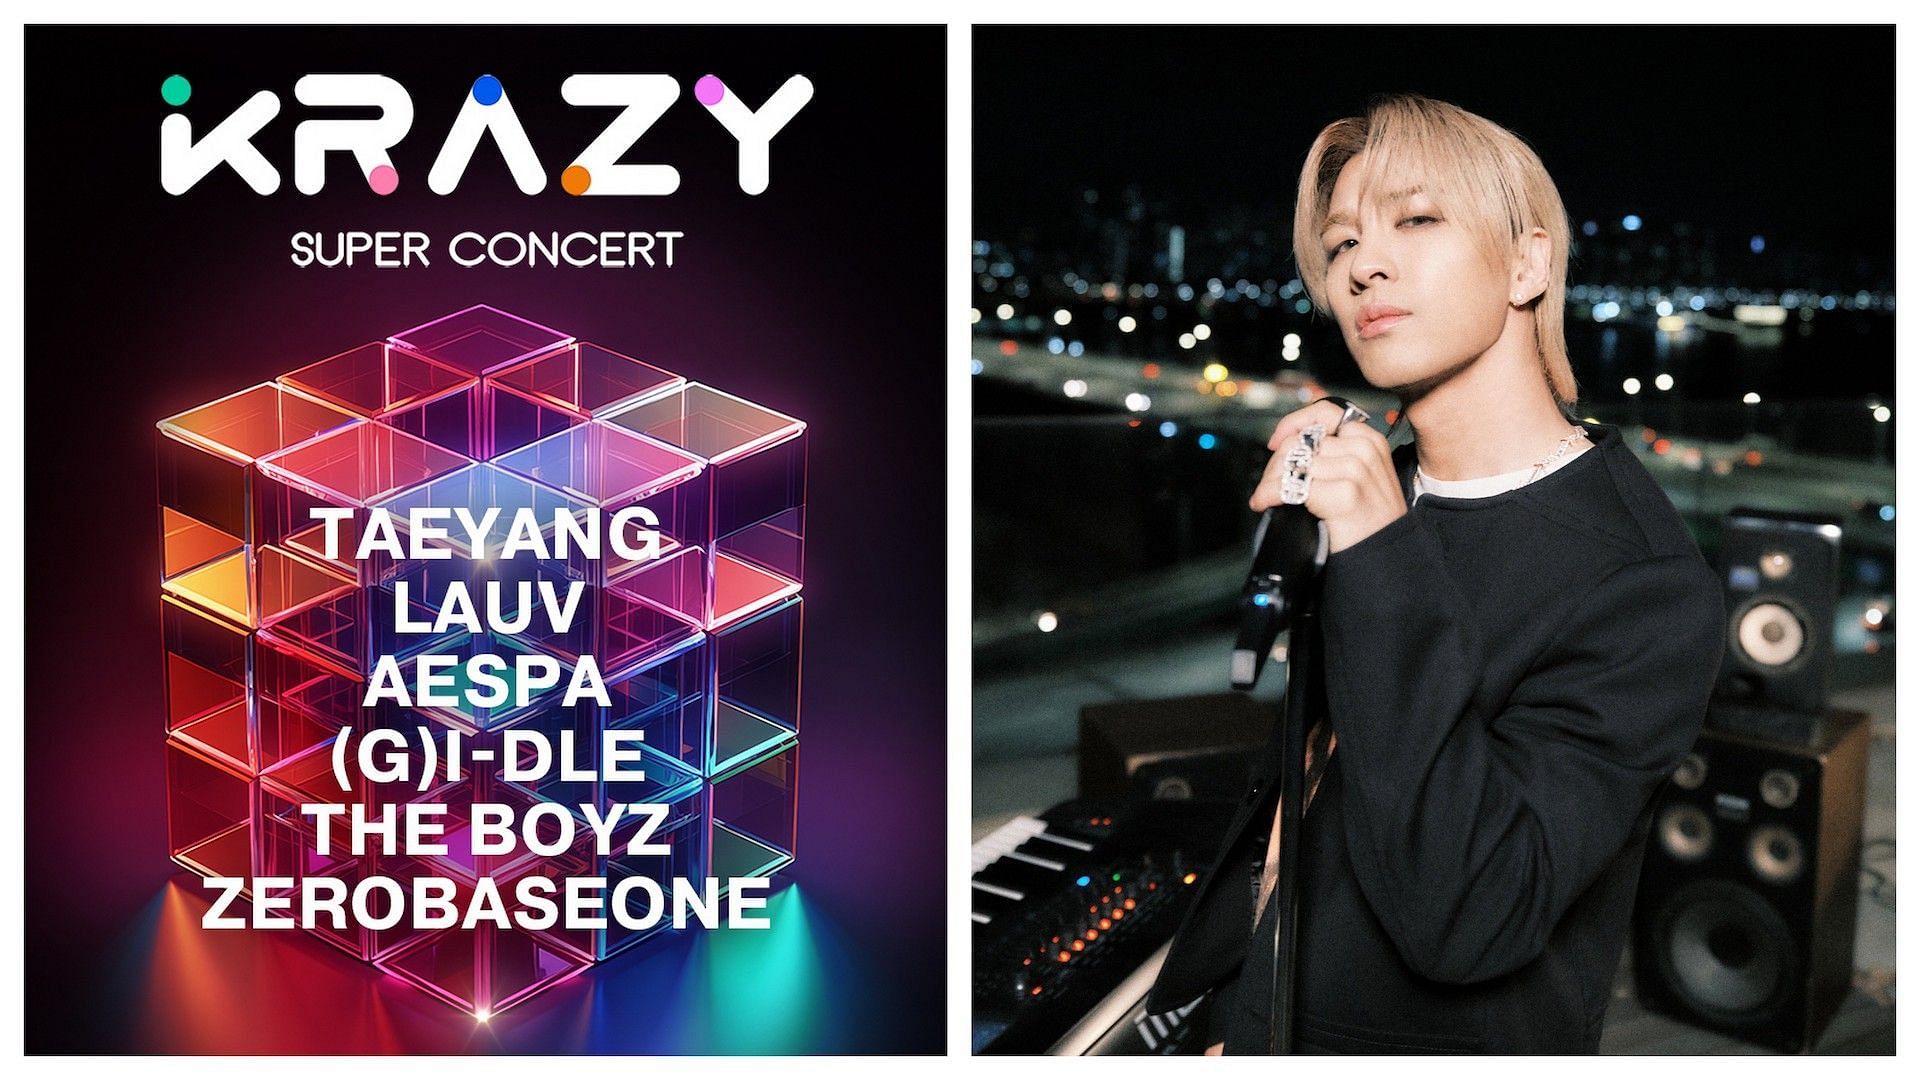 Taeyang to headline Krazy Super Concert (Images via X/@krazyconcert &amp; X/@Realtaeyang)